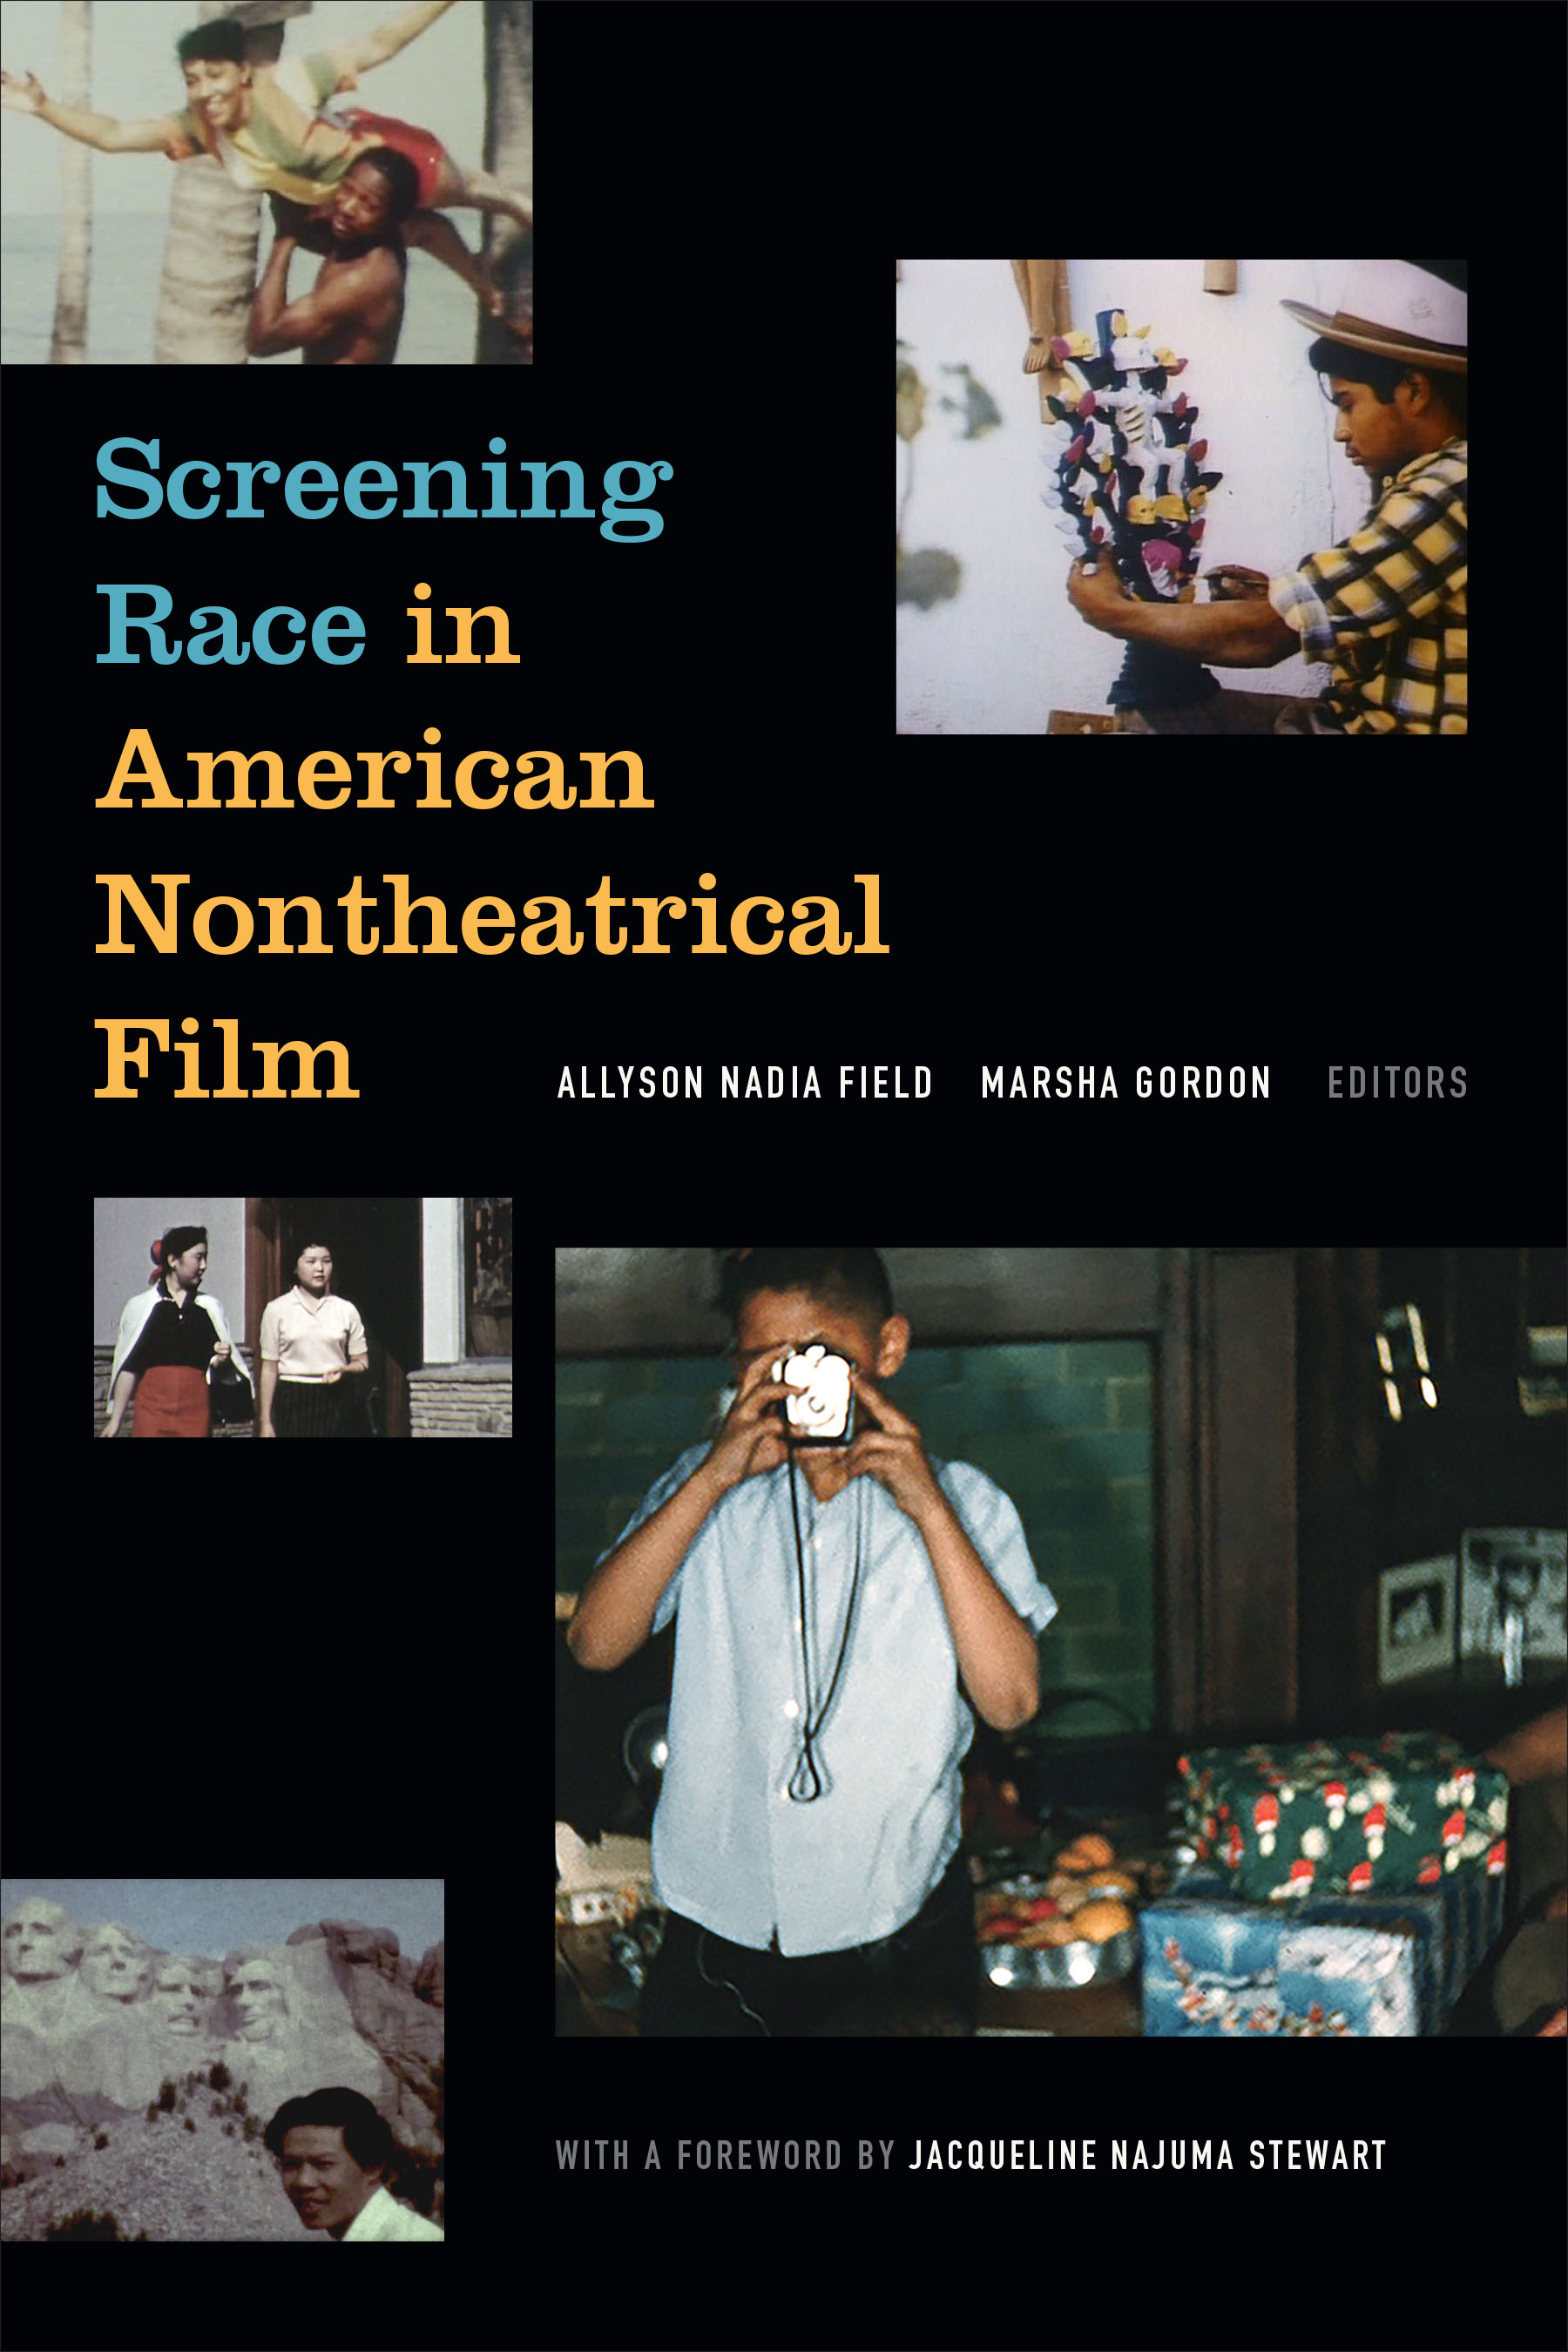 Download Screening Race in American Nontheatrical Film - Allyson Nadia Field | ePub